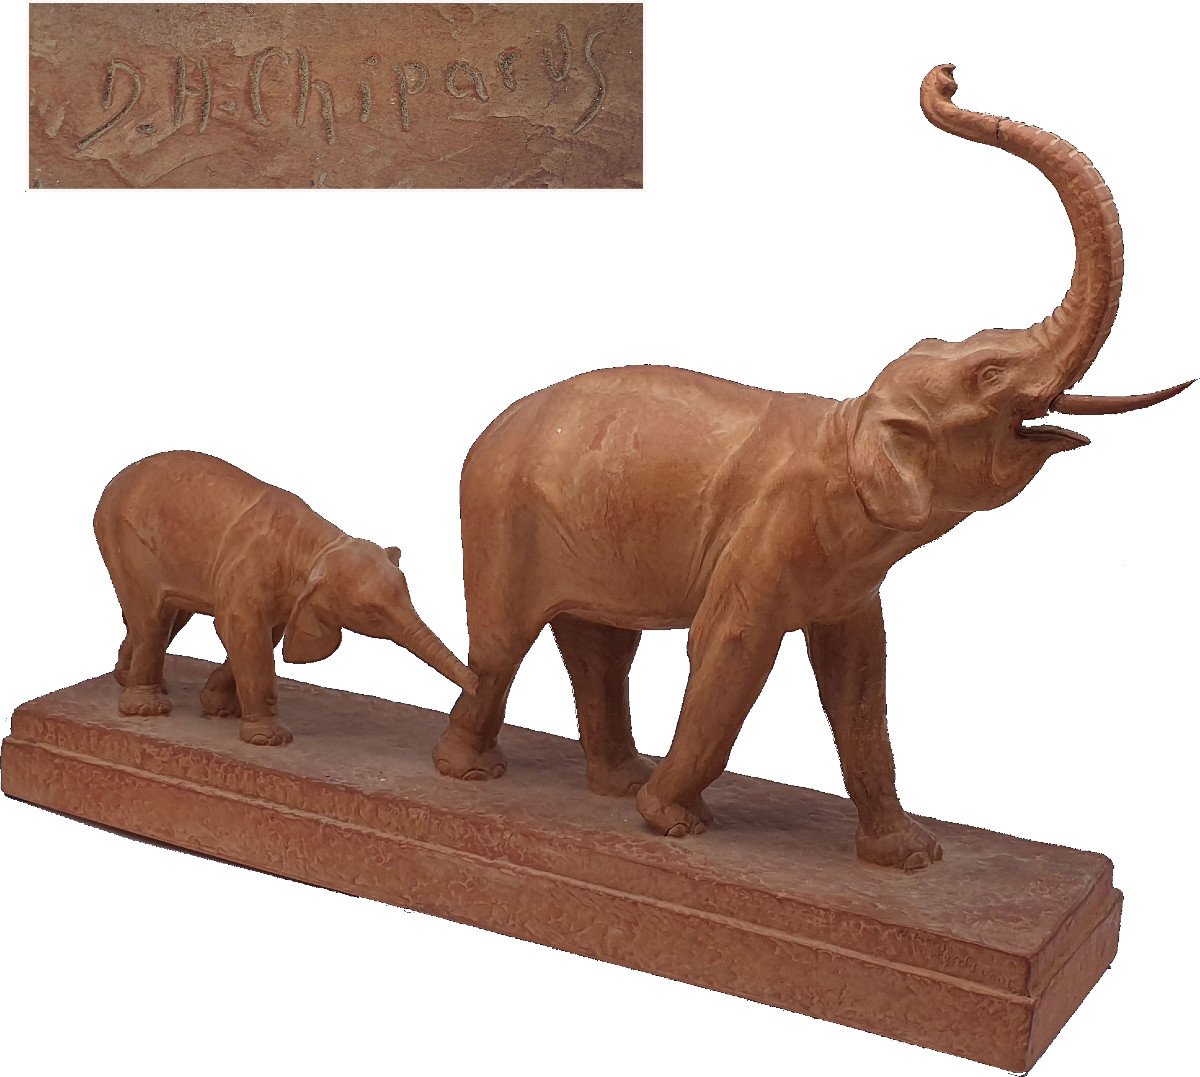 Demetre Chiparus Terracotta Sculpture A Barrissant Elephant And Her Elephant